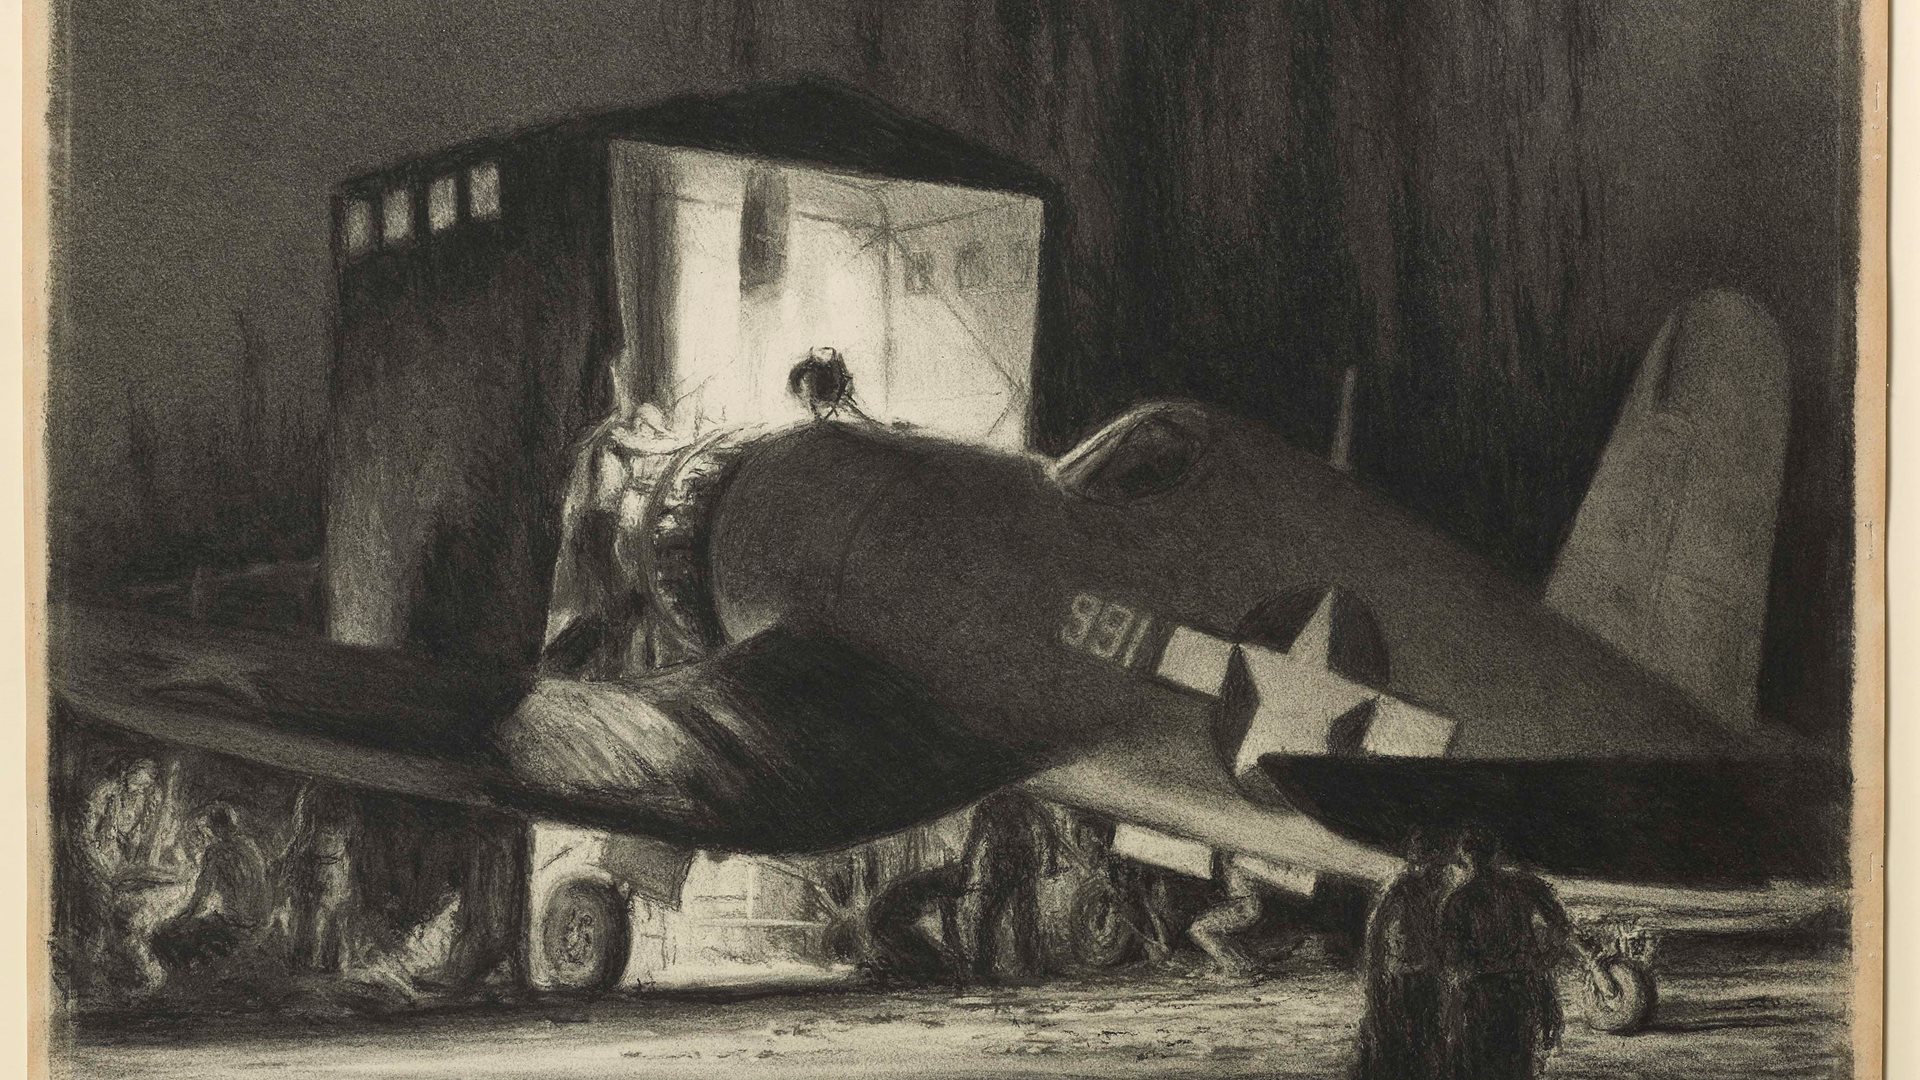 Night Maintenance, Corsair, April 1944